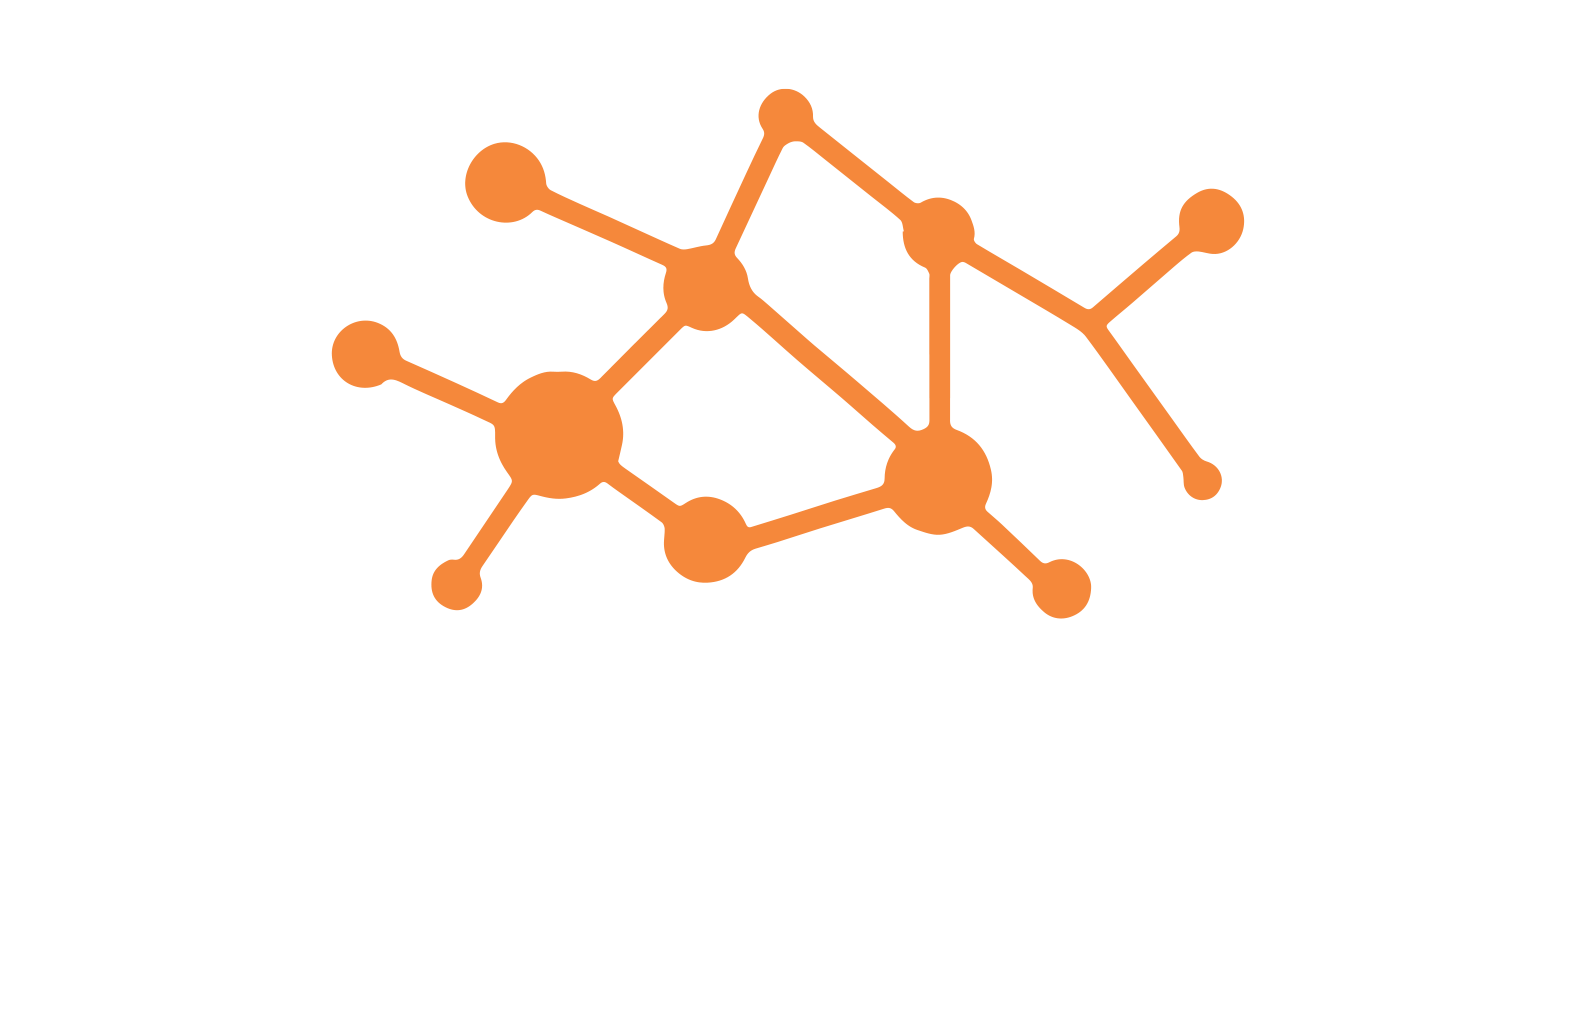 index365 logo - white lettering - vertical